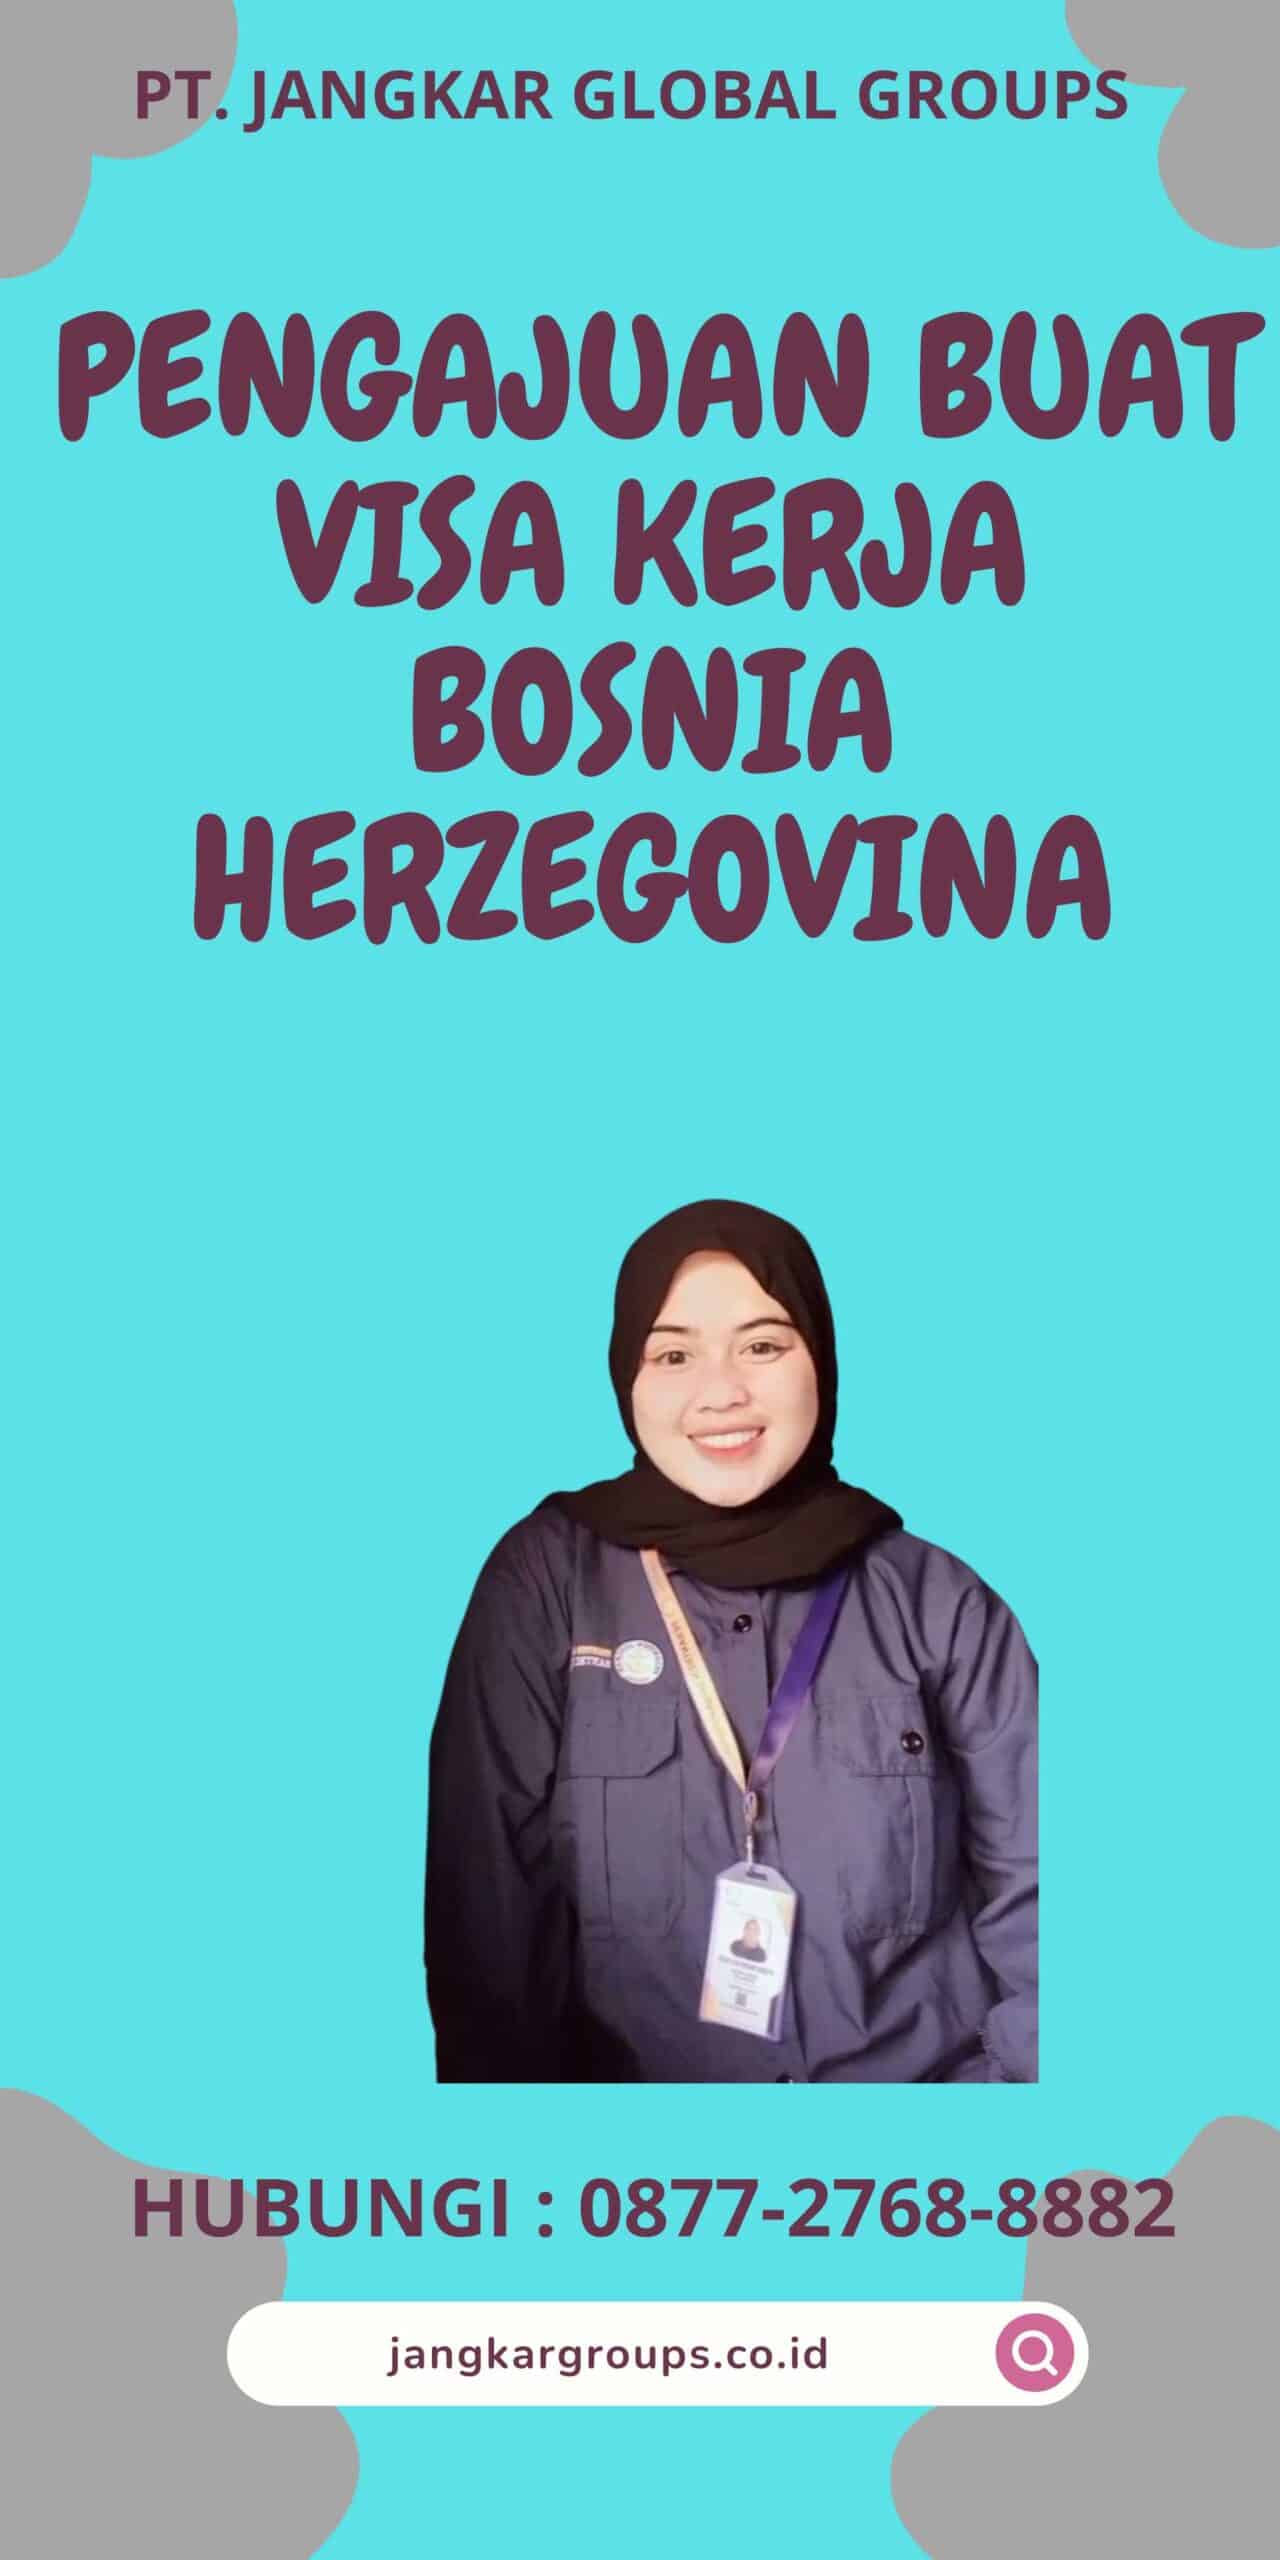 Pengajuan Buat Visa Kerja Bosnia Herzegovina